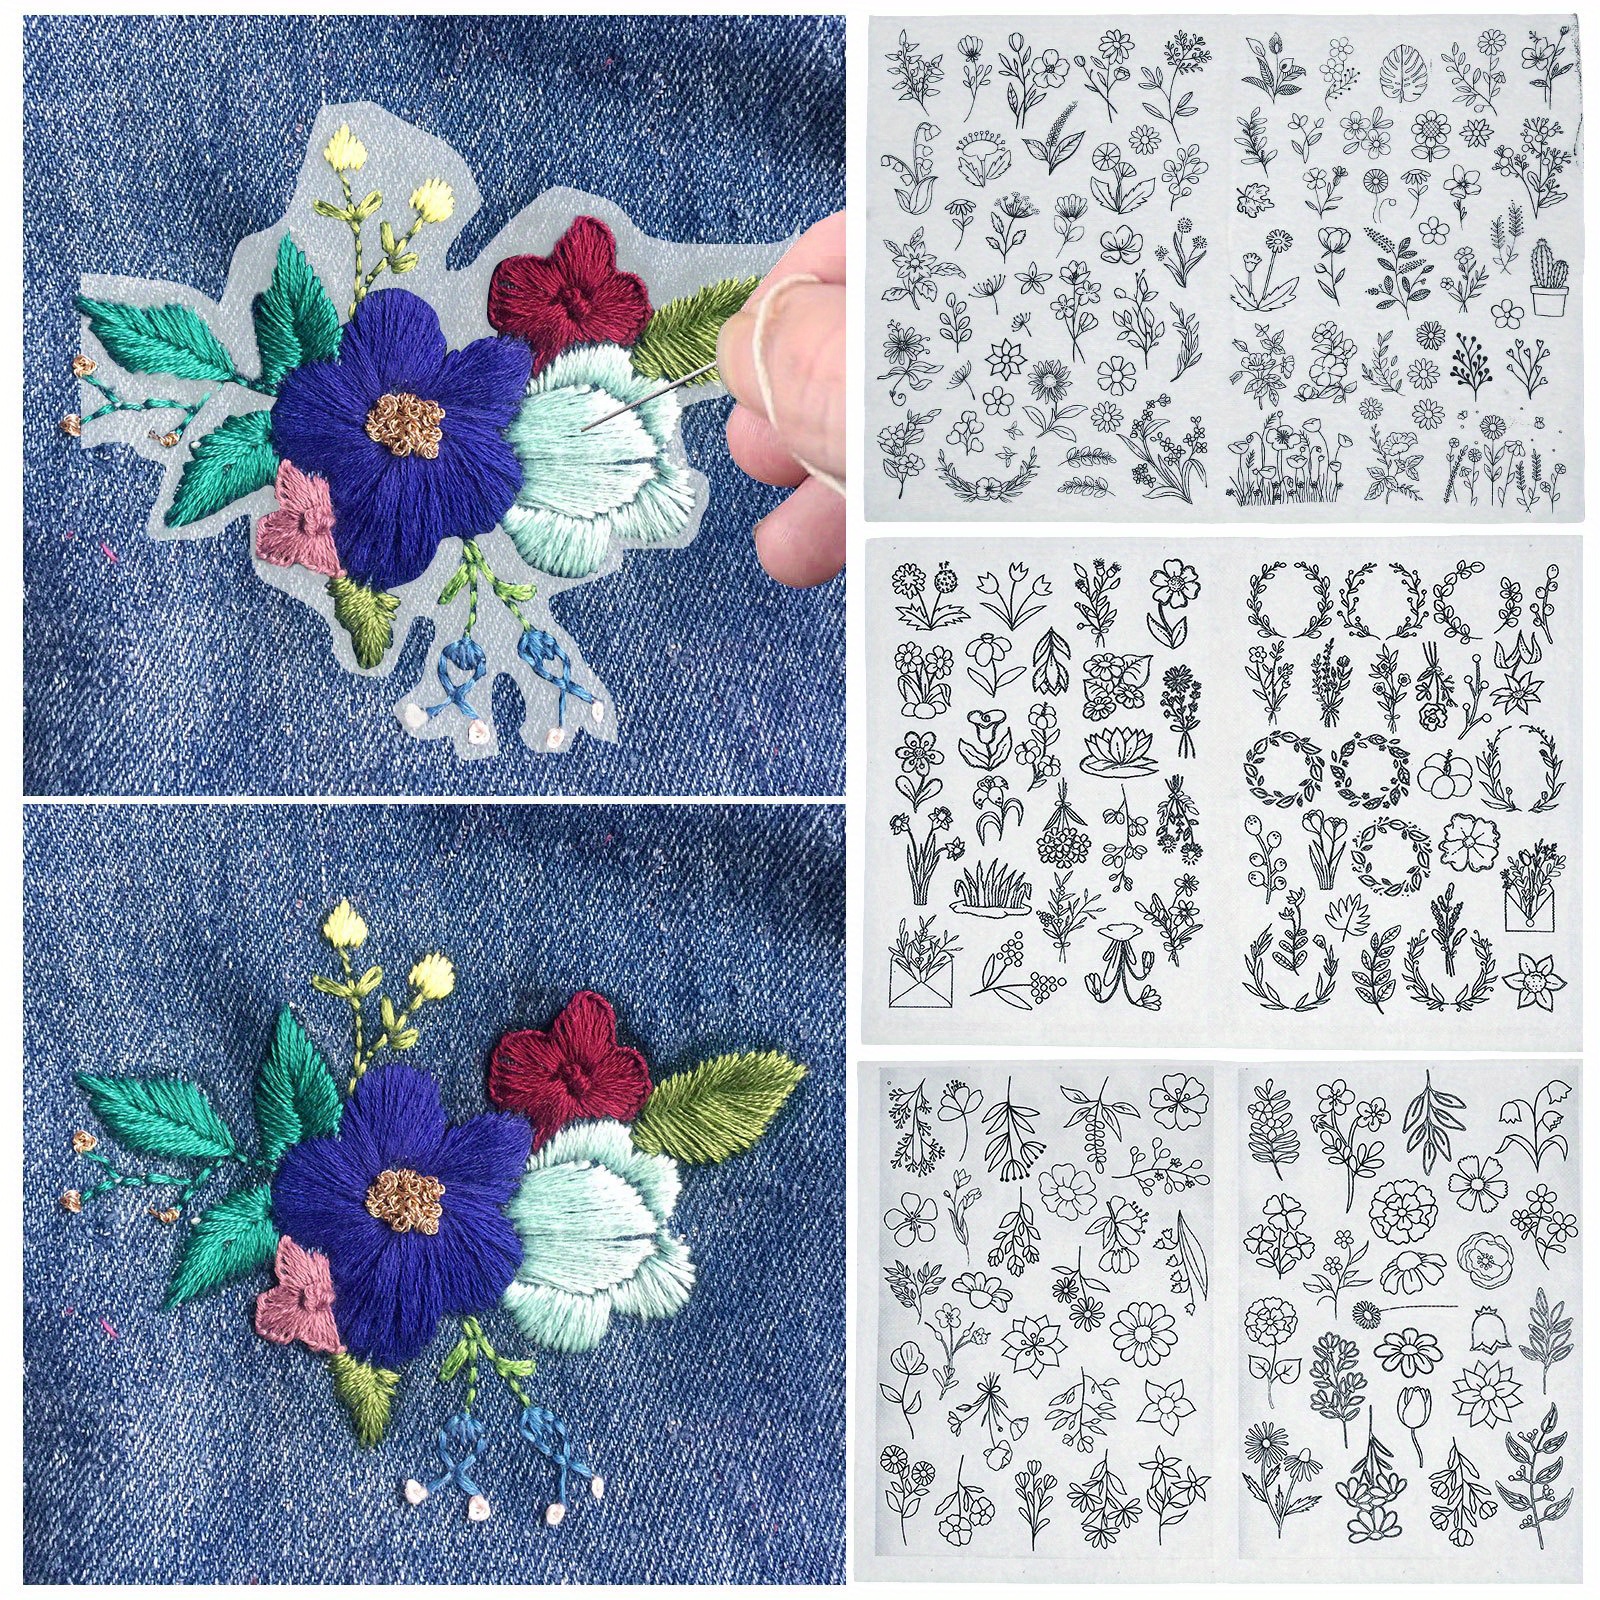 Cheap 1PC Stitching Embroidery Paper Wash Away Stabilizer Water Soluble  Embroidery Stabilizer